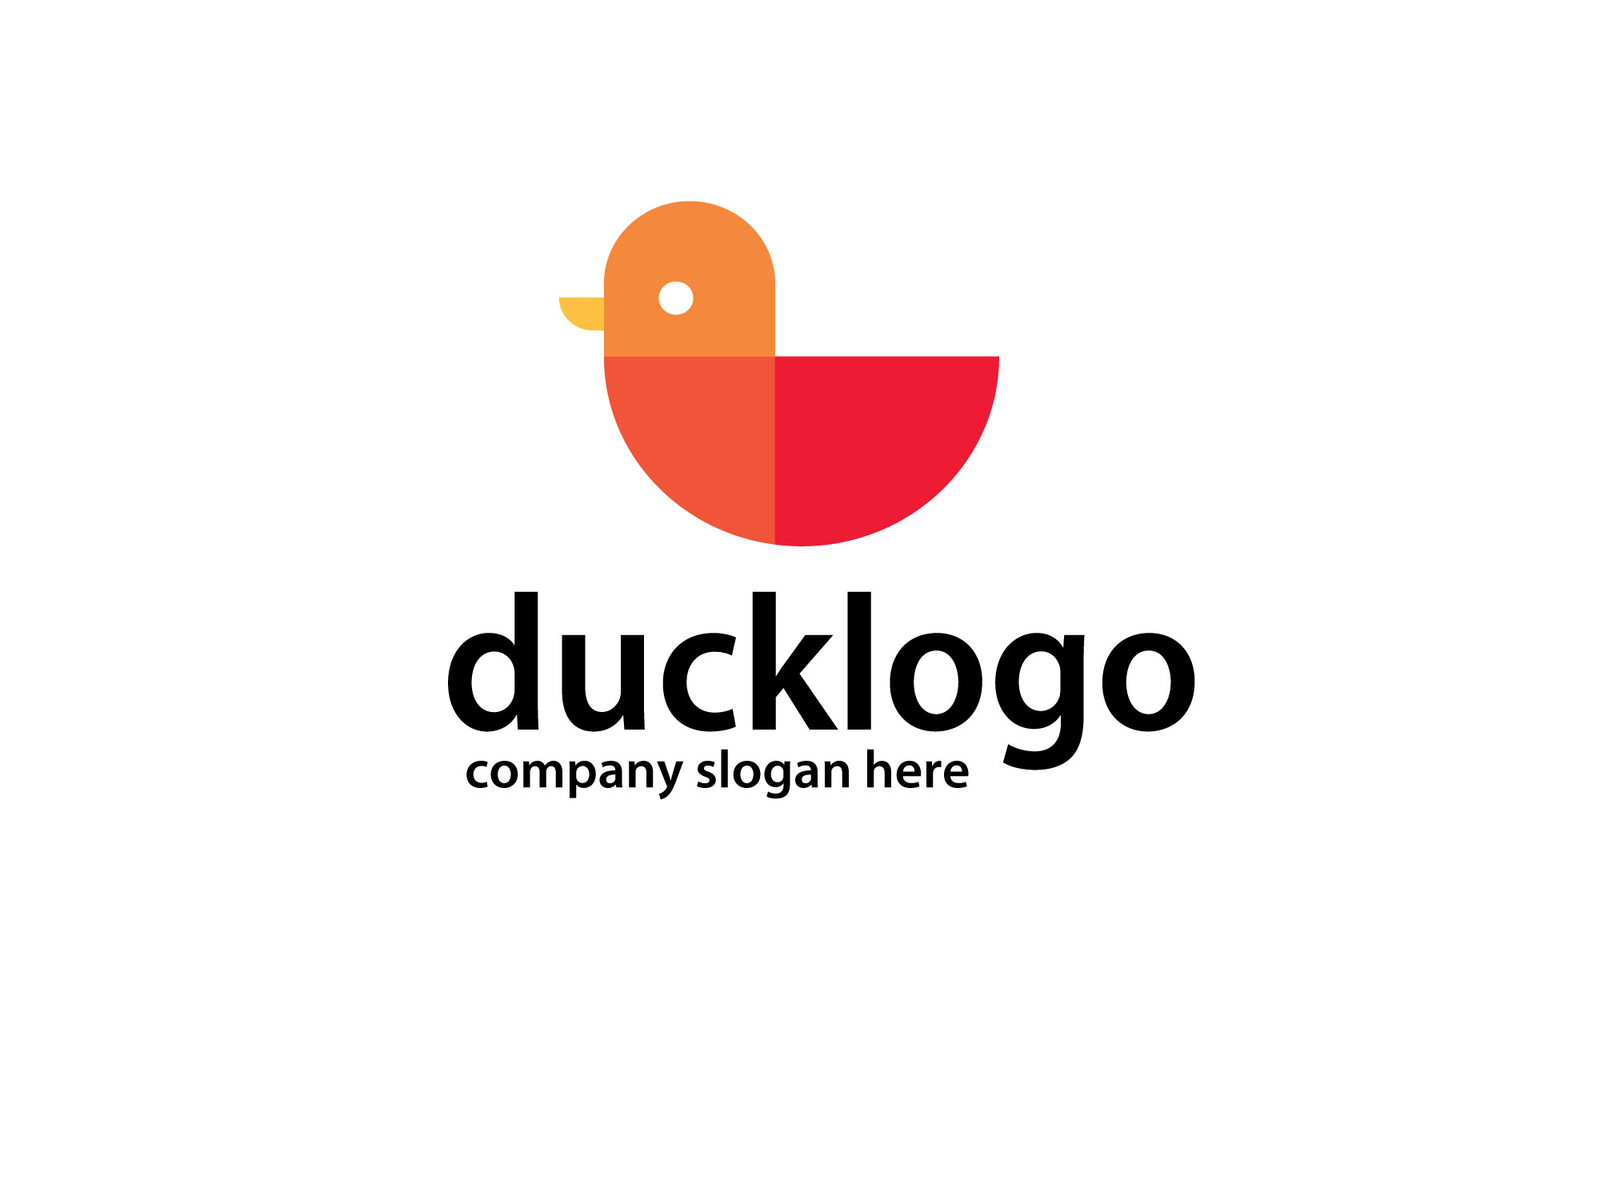 duckcapture logo png